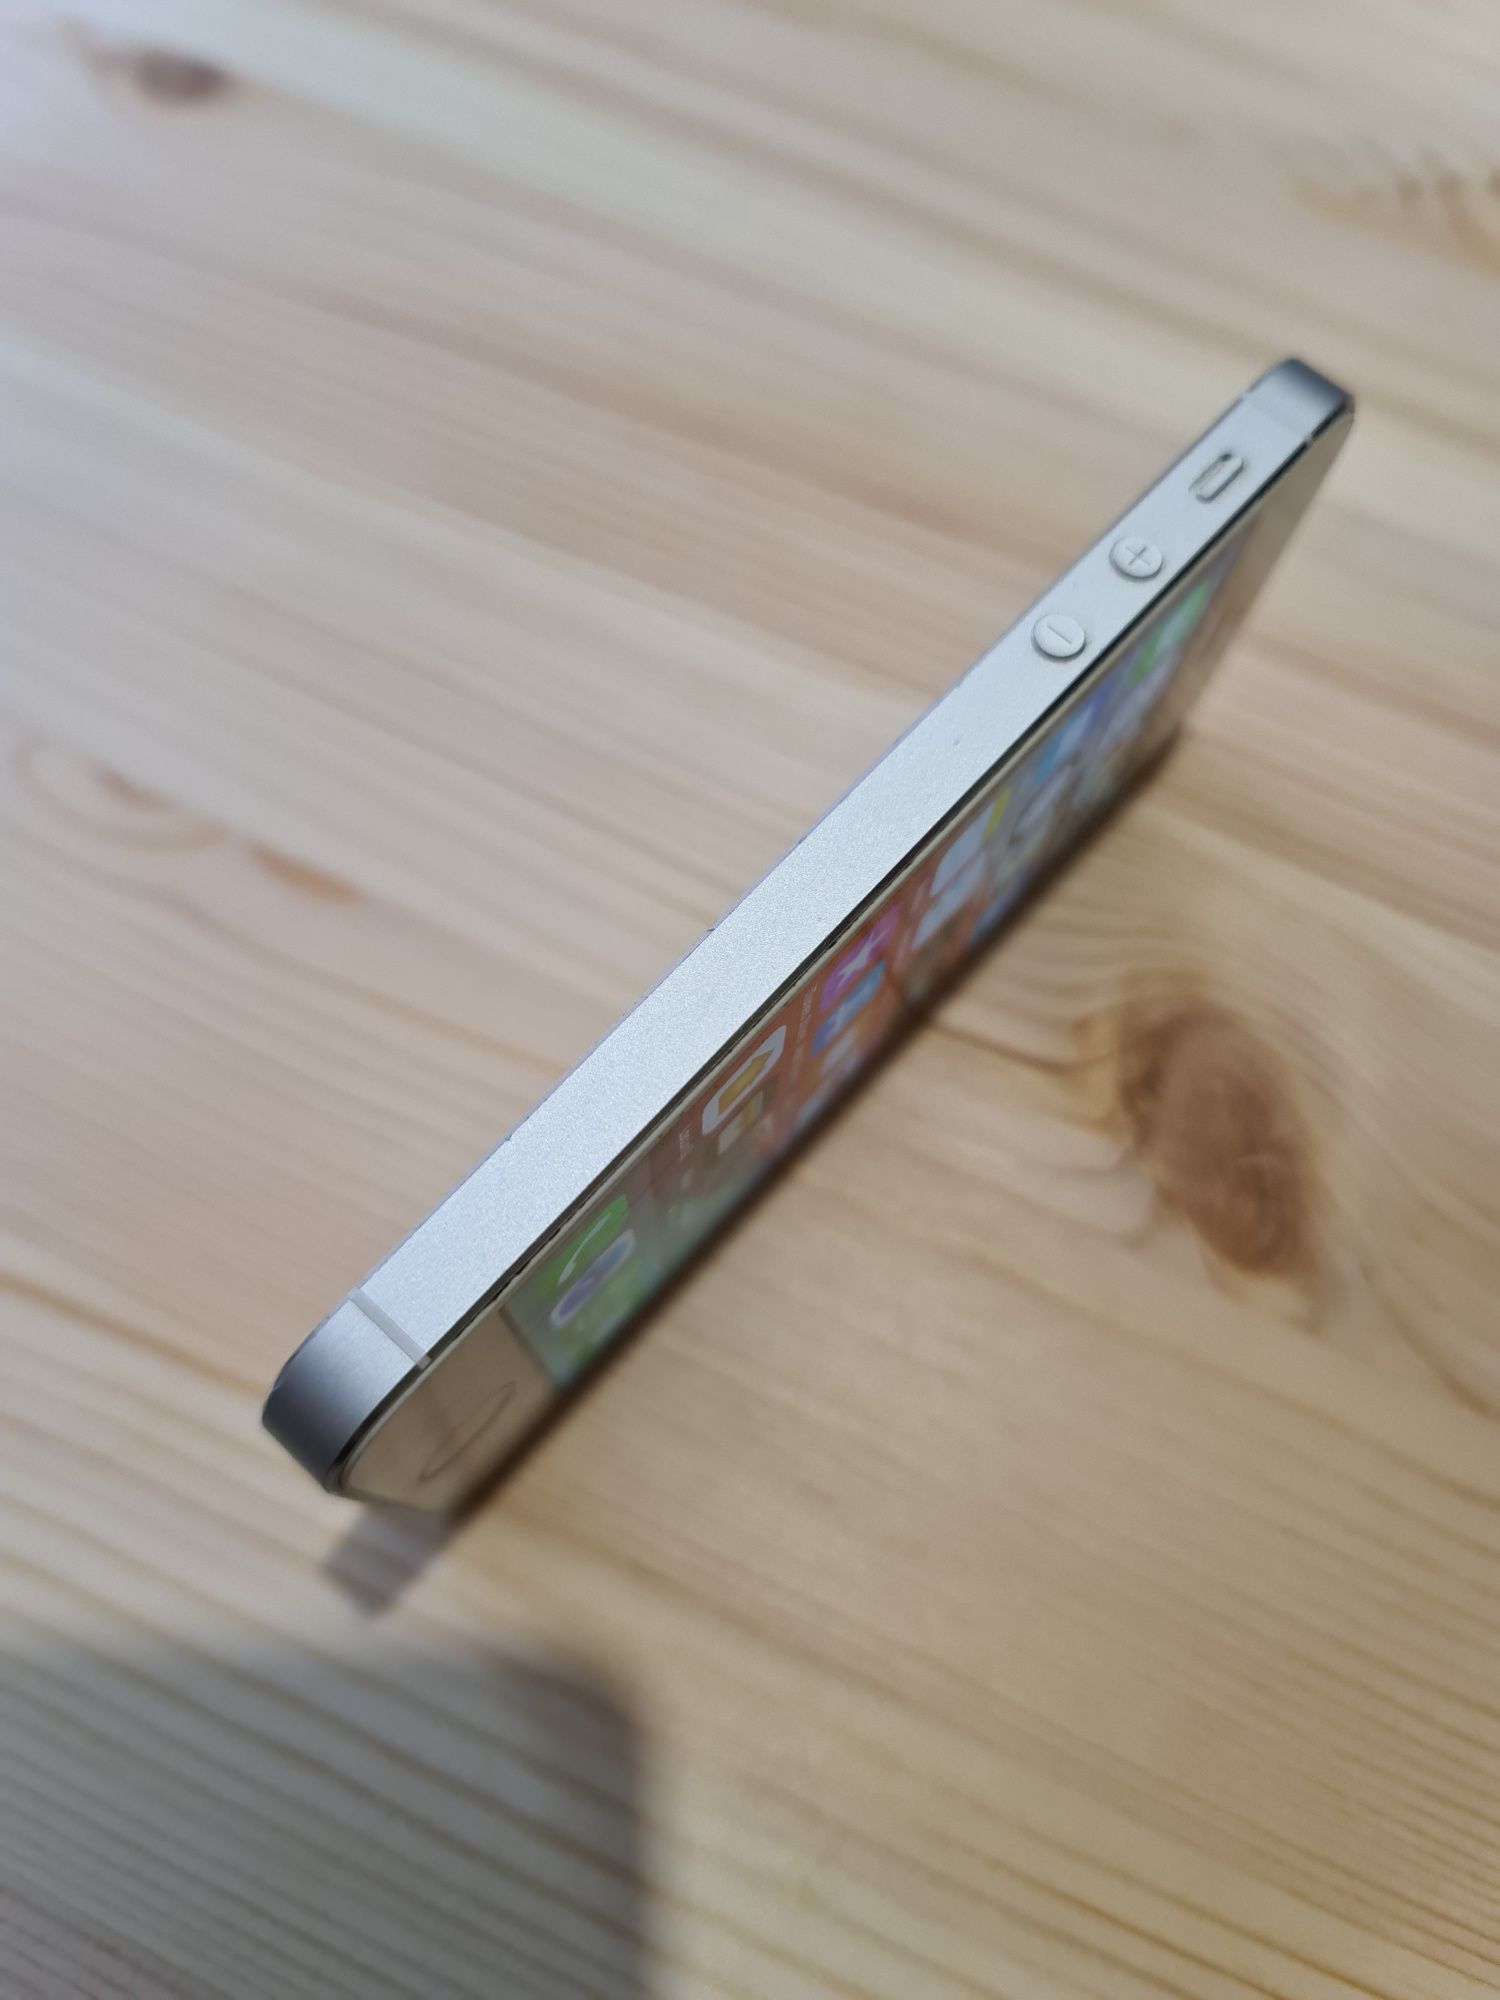 Iphone S Silver Gb Neverlock Bucuresti Sectorul Olx Ro